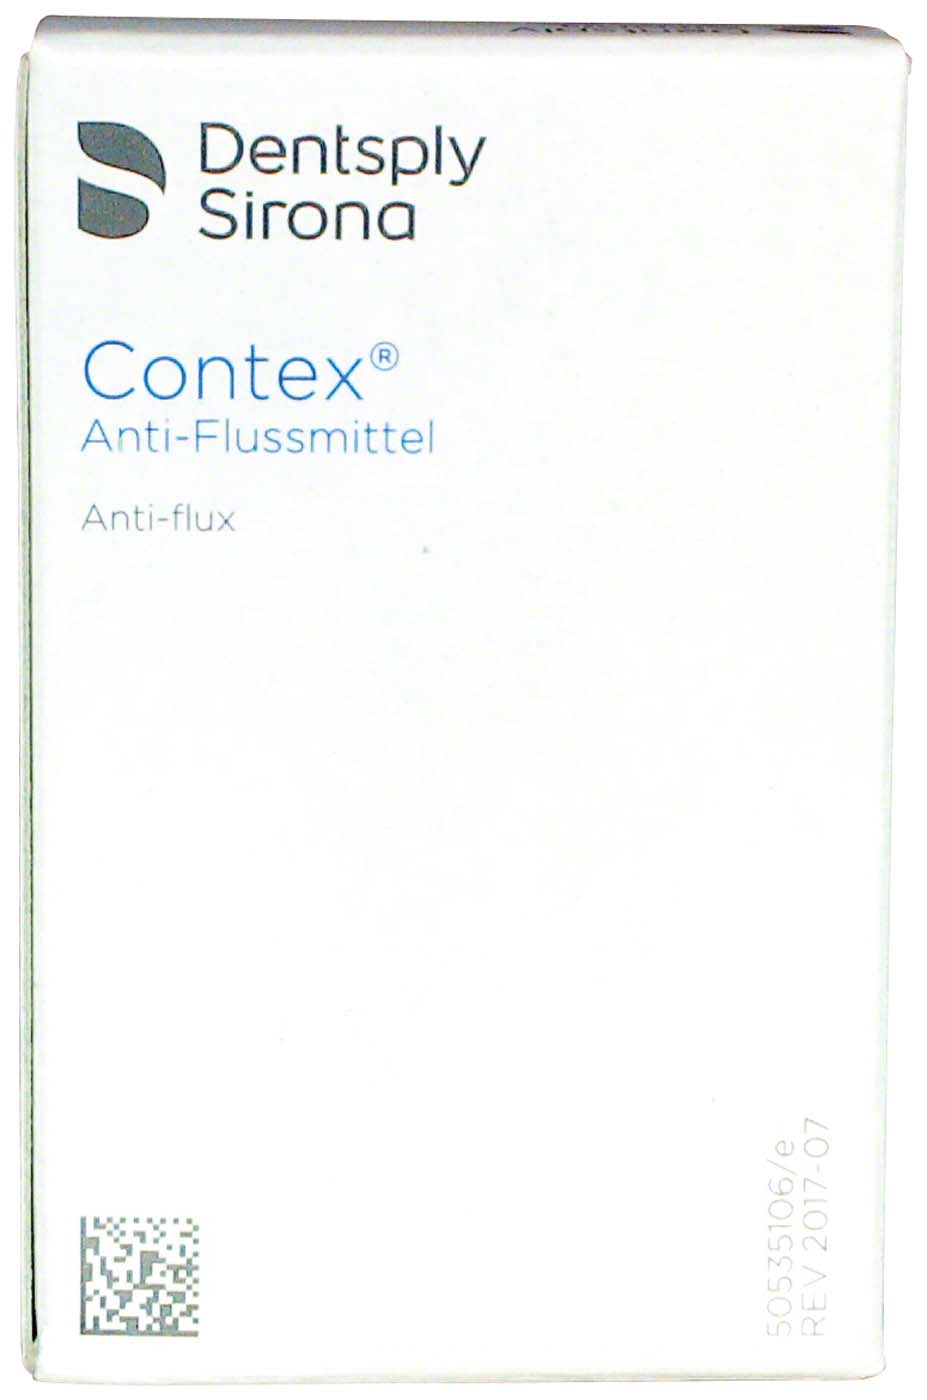 Contex® Dentsply Sirona